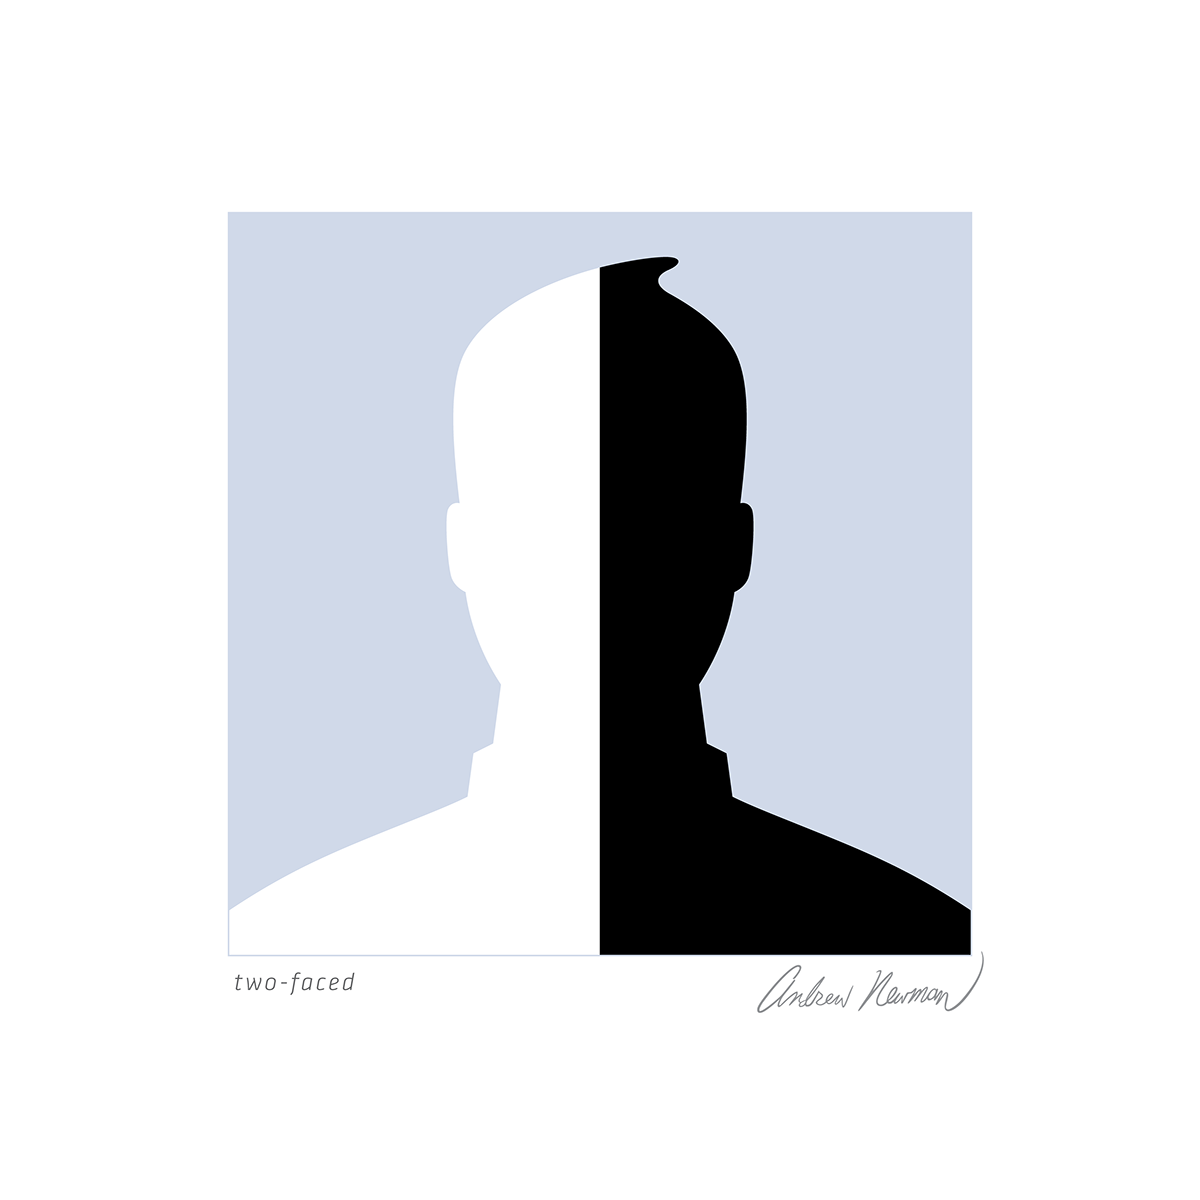 facebook profile  generic profile faces facial attraction defaced Face the music facetime Profile image visual pun bifacial